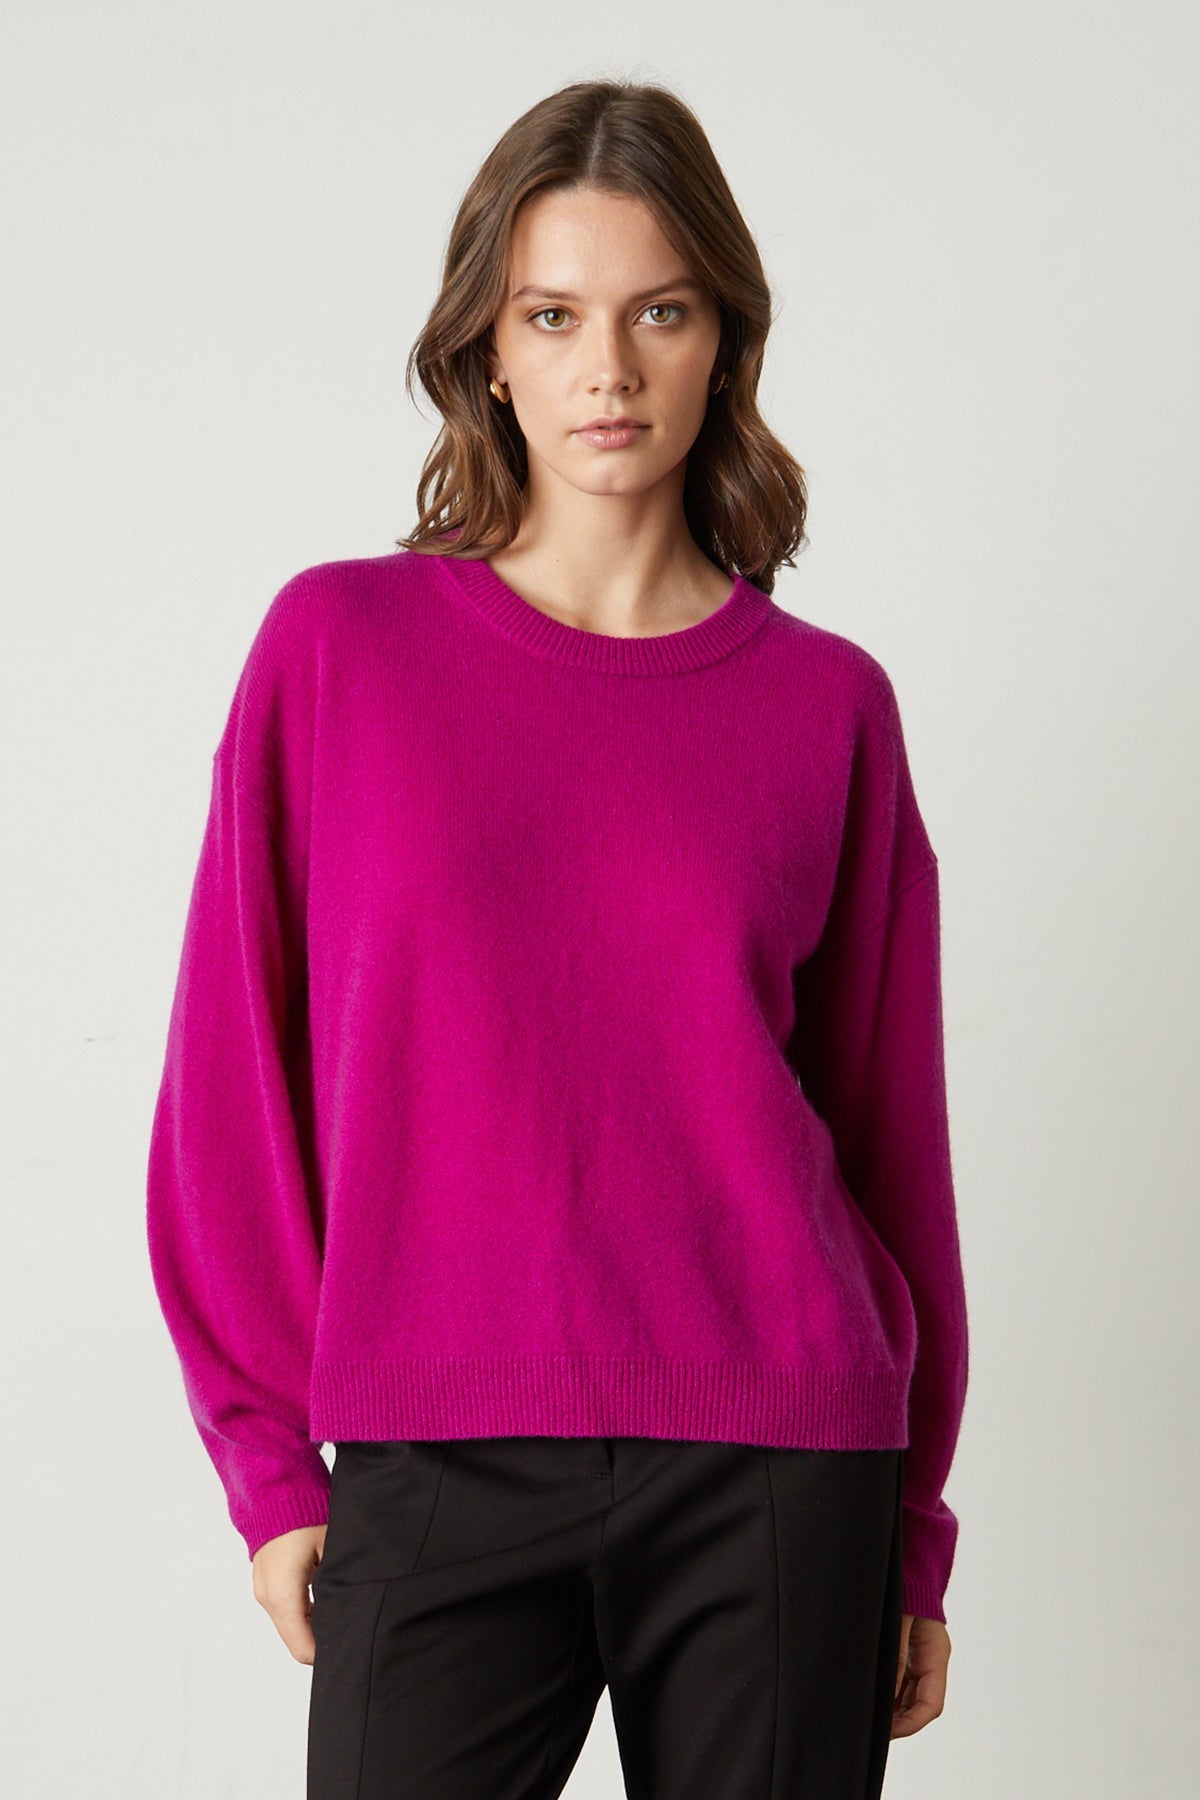 Brynne Cashmere Crew Neck Sweater in bright magenta pink front-26677208416449